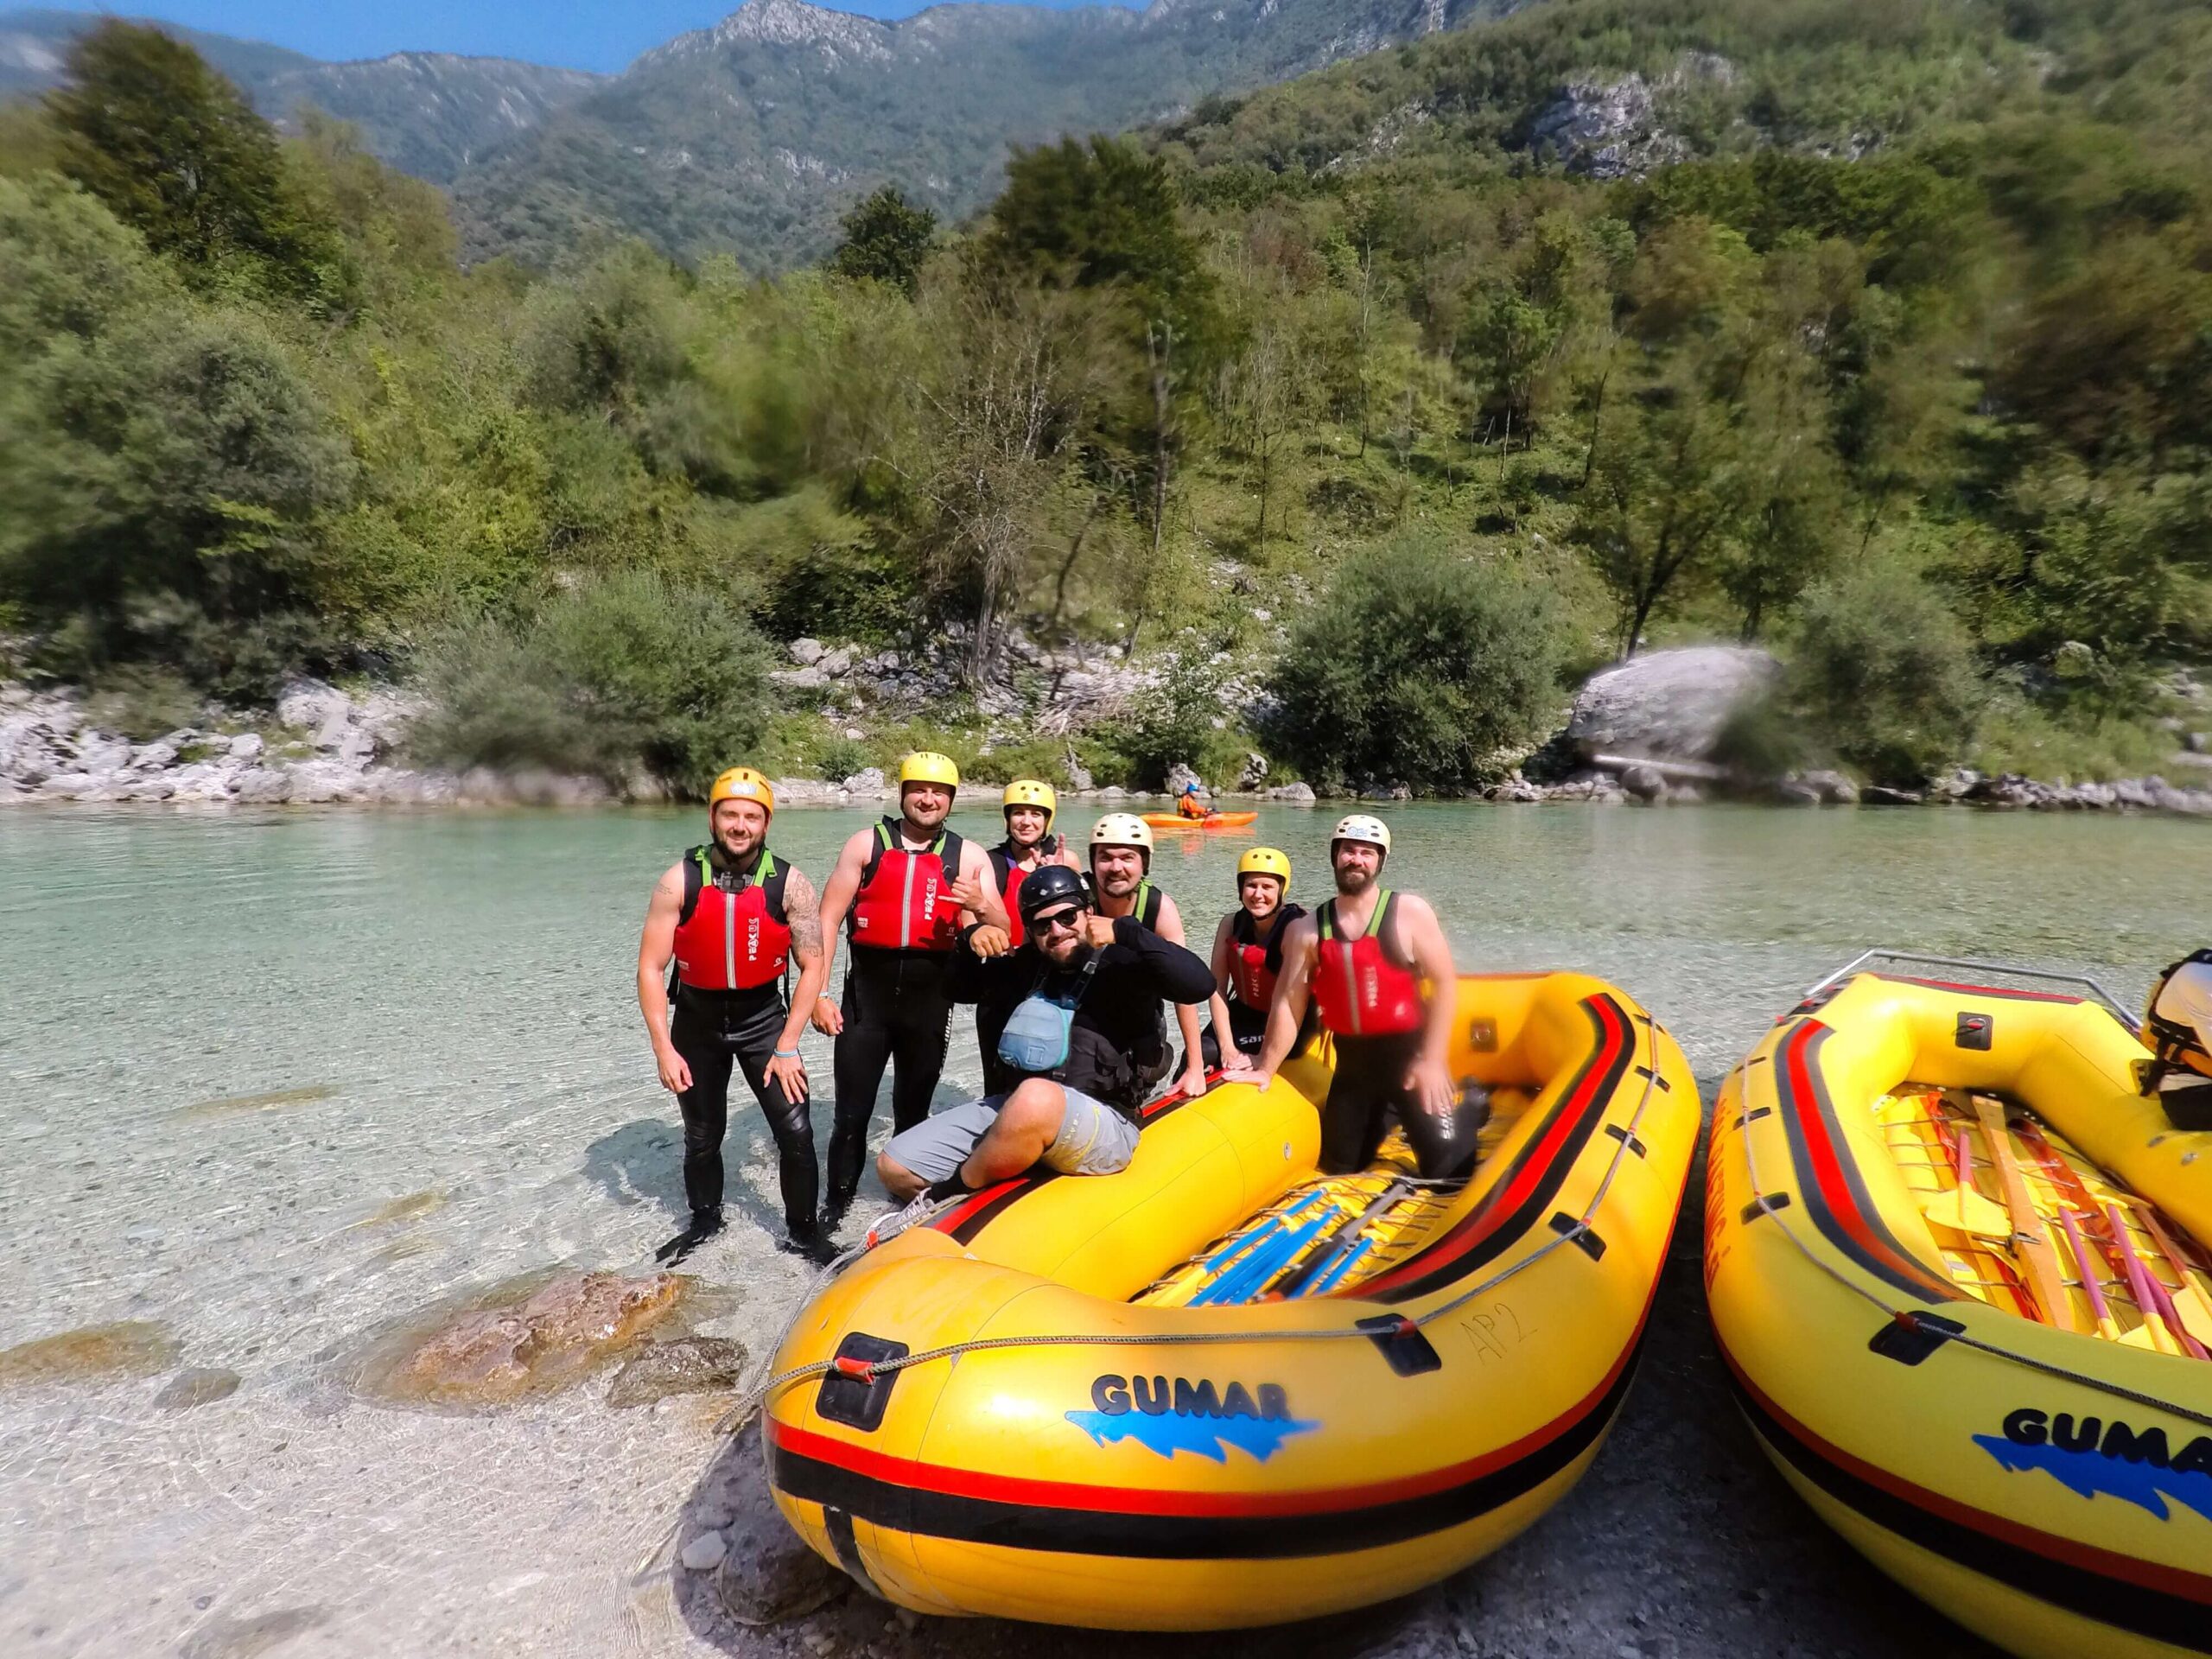 Rafting Team Photo, Soca River, Triglav National Park, Slovenia